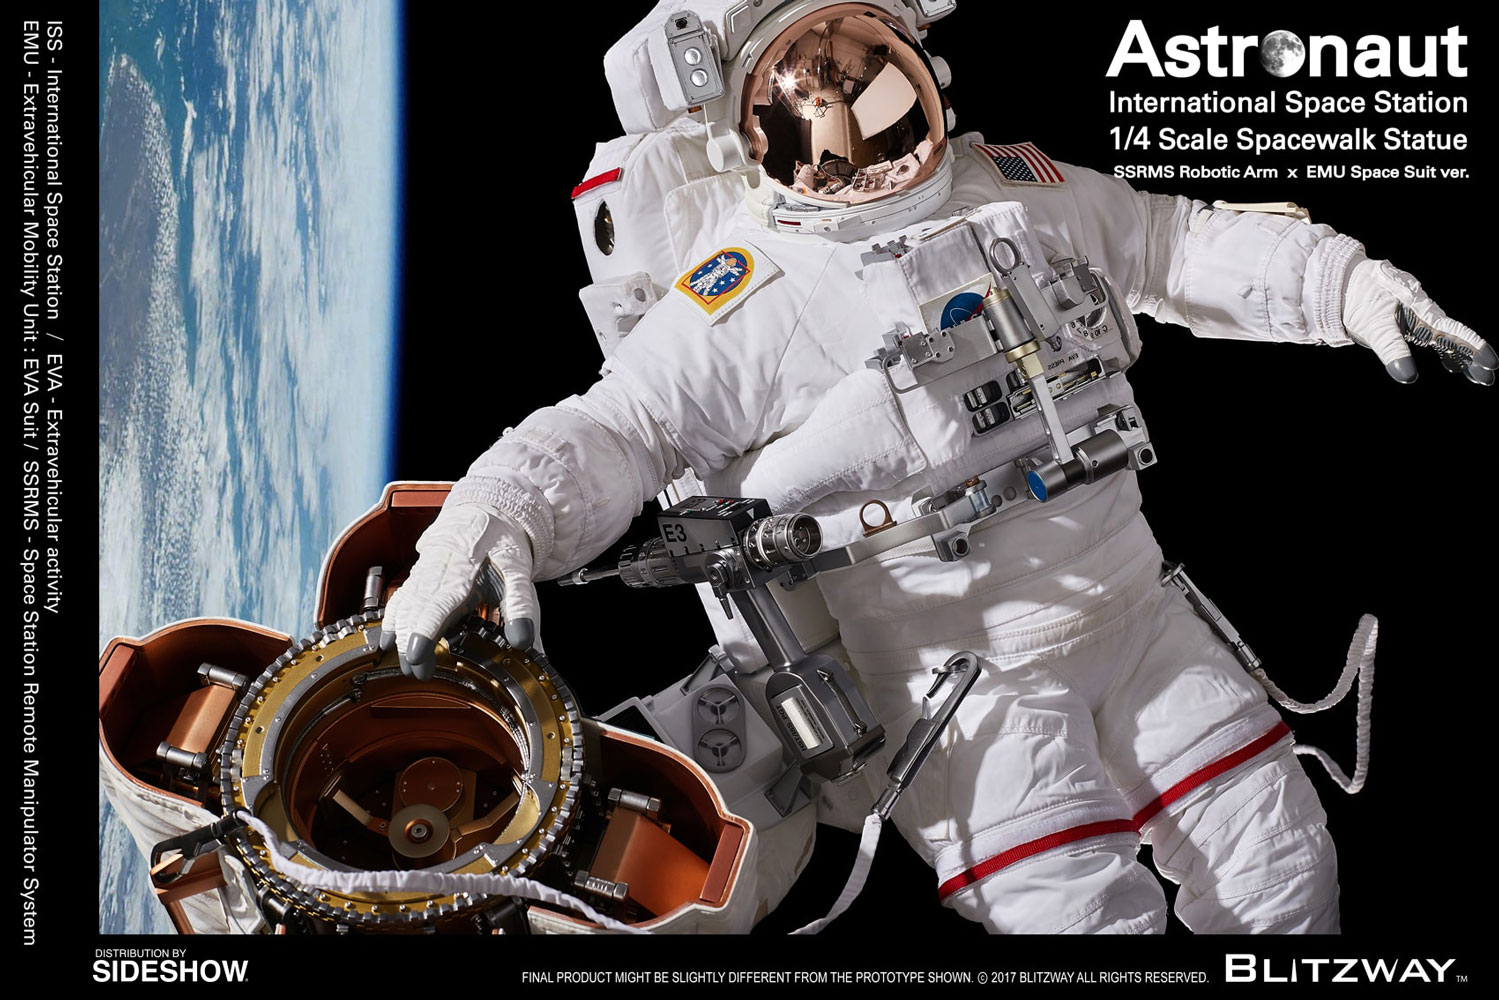 astronaut-iss-emu-version-quarter-scale-figure-blitzway-903319-06.jpg